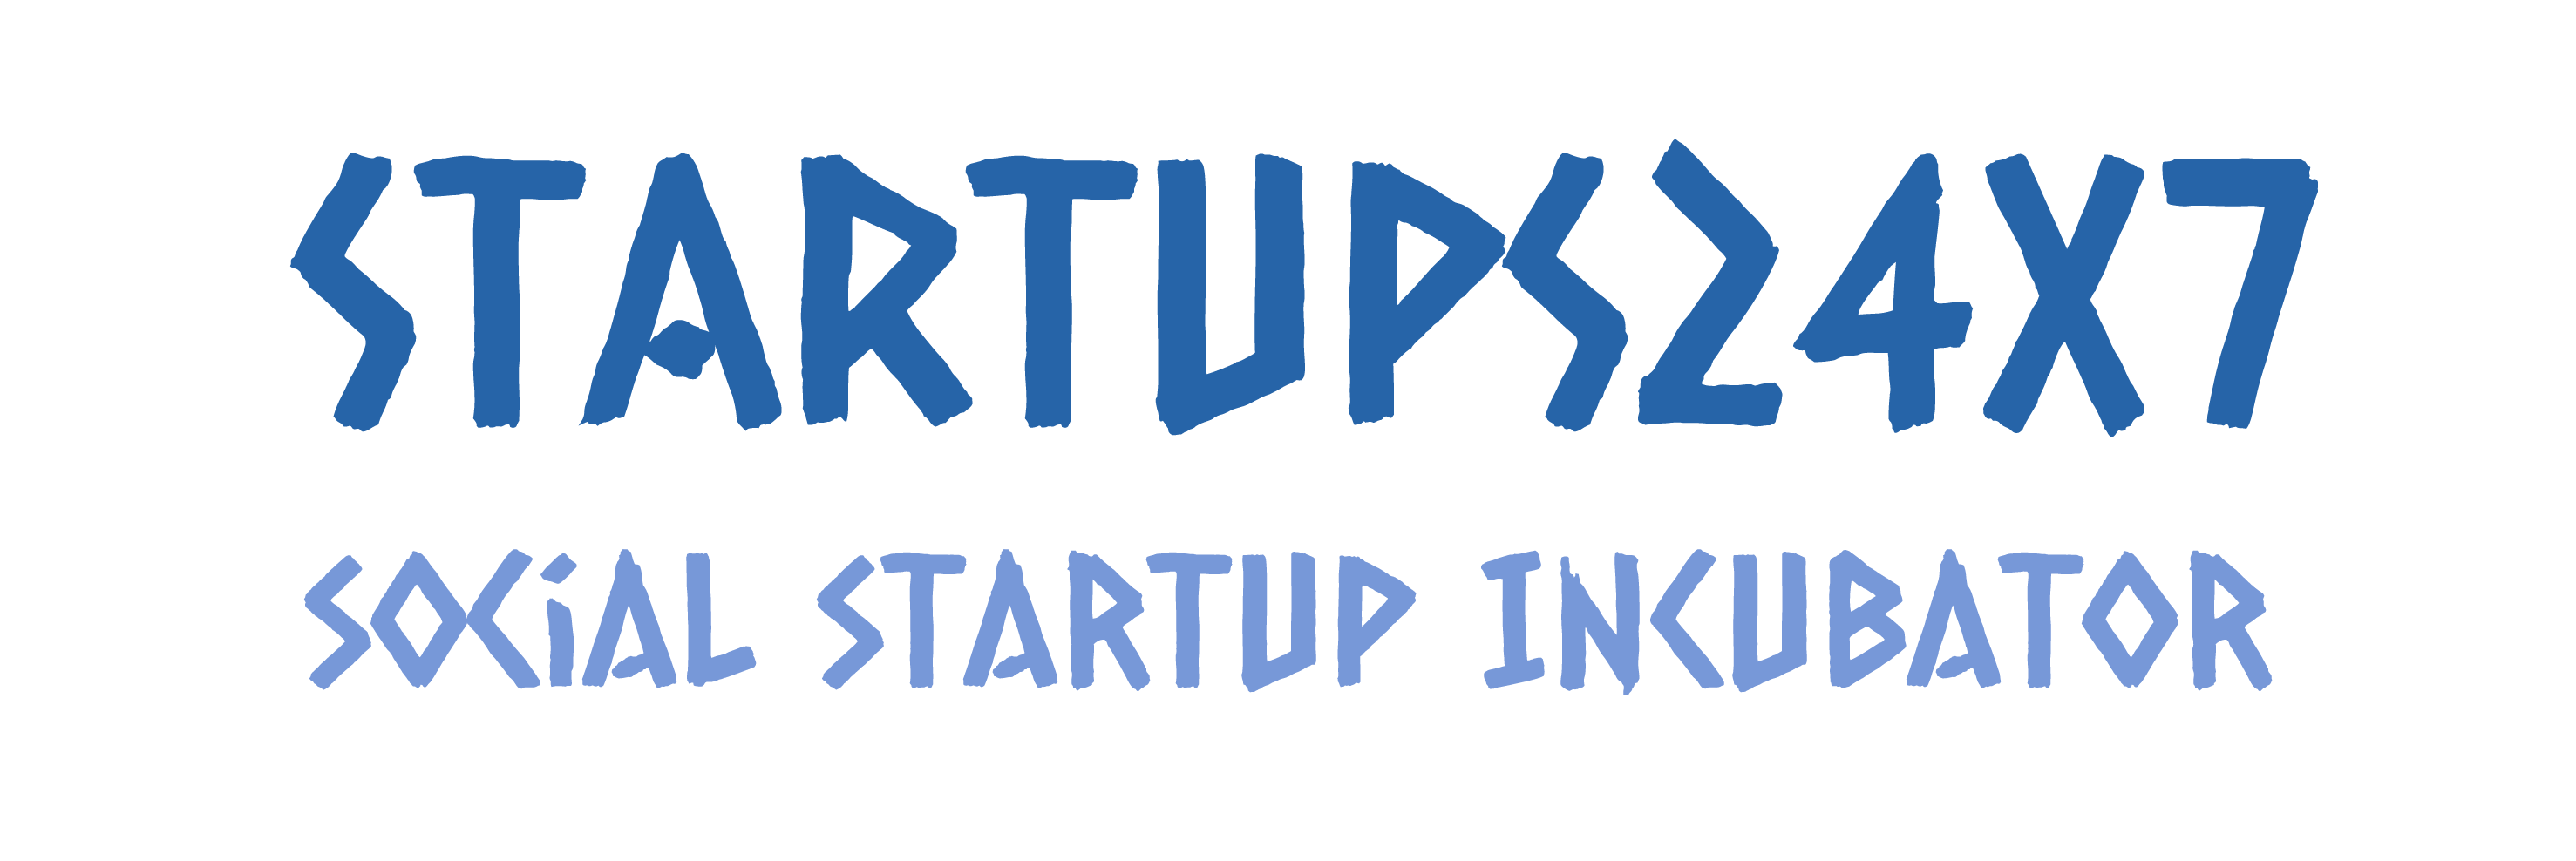 Startups24x7.com | Investors | Services | More